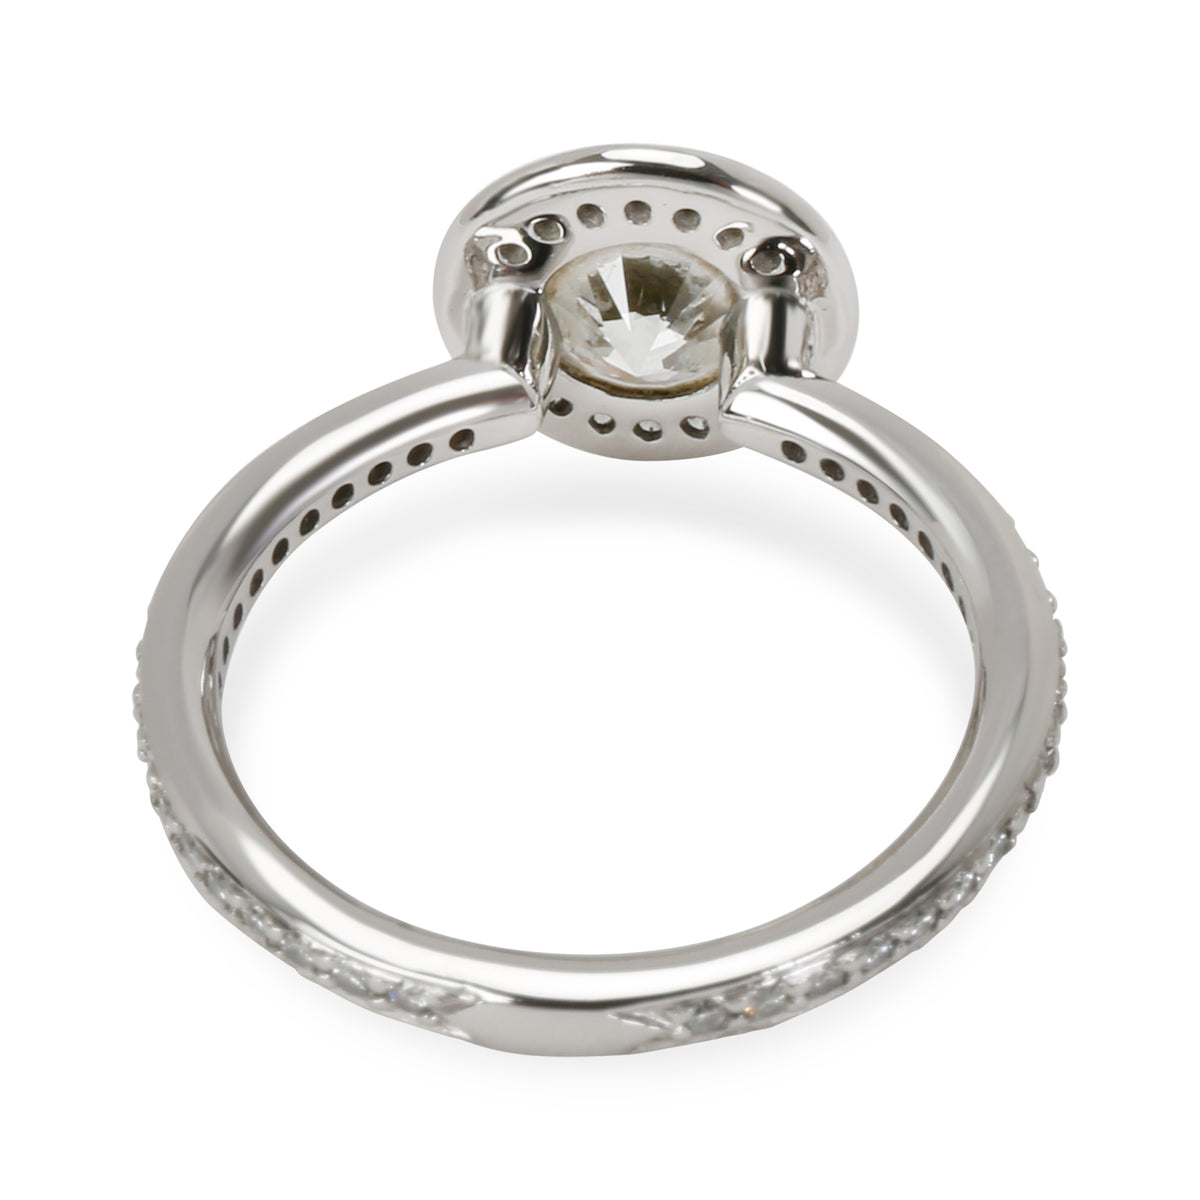 GIA Certified Ritani Diamond Engagement Ring in Platinum H SI1 1.37 CTW